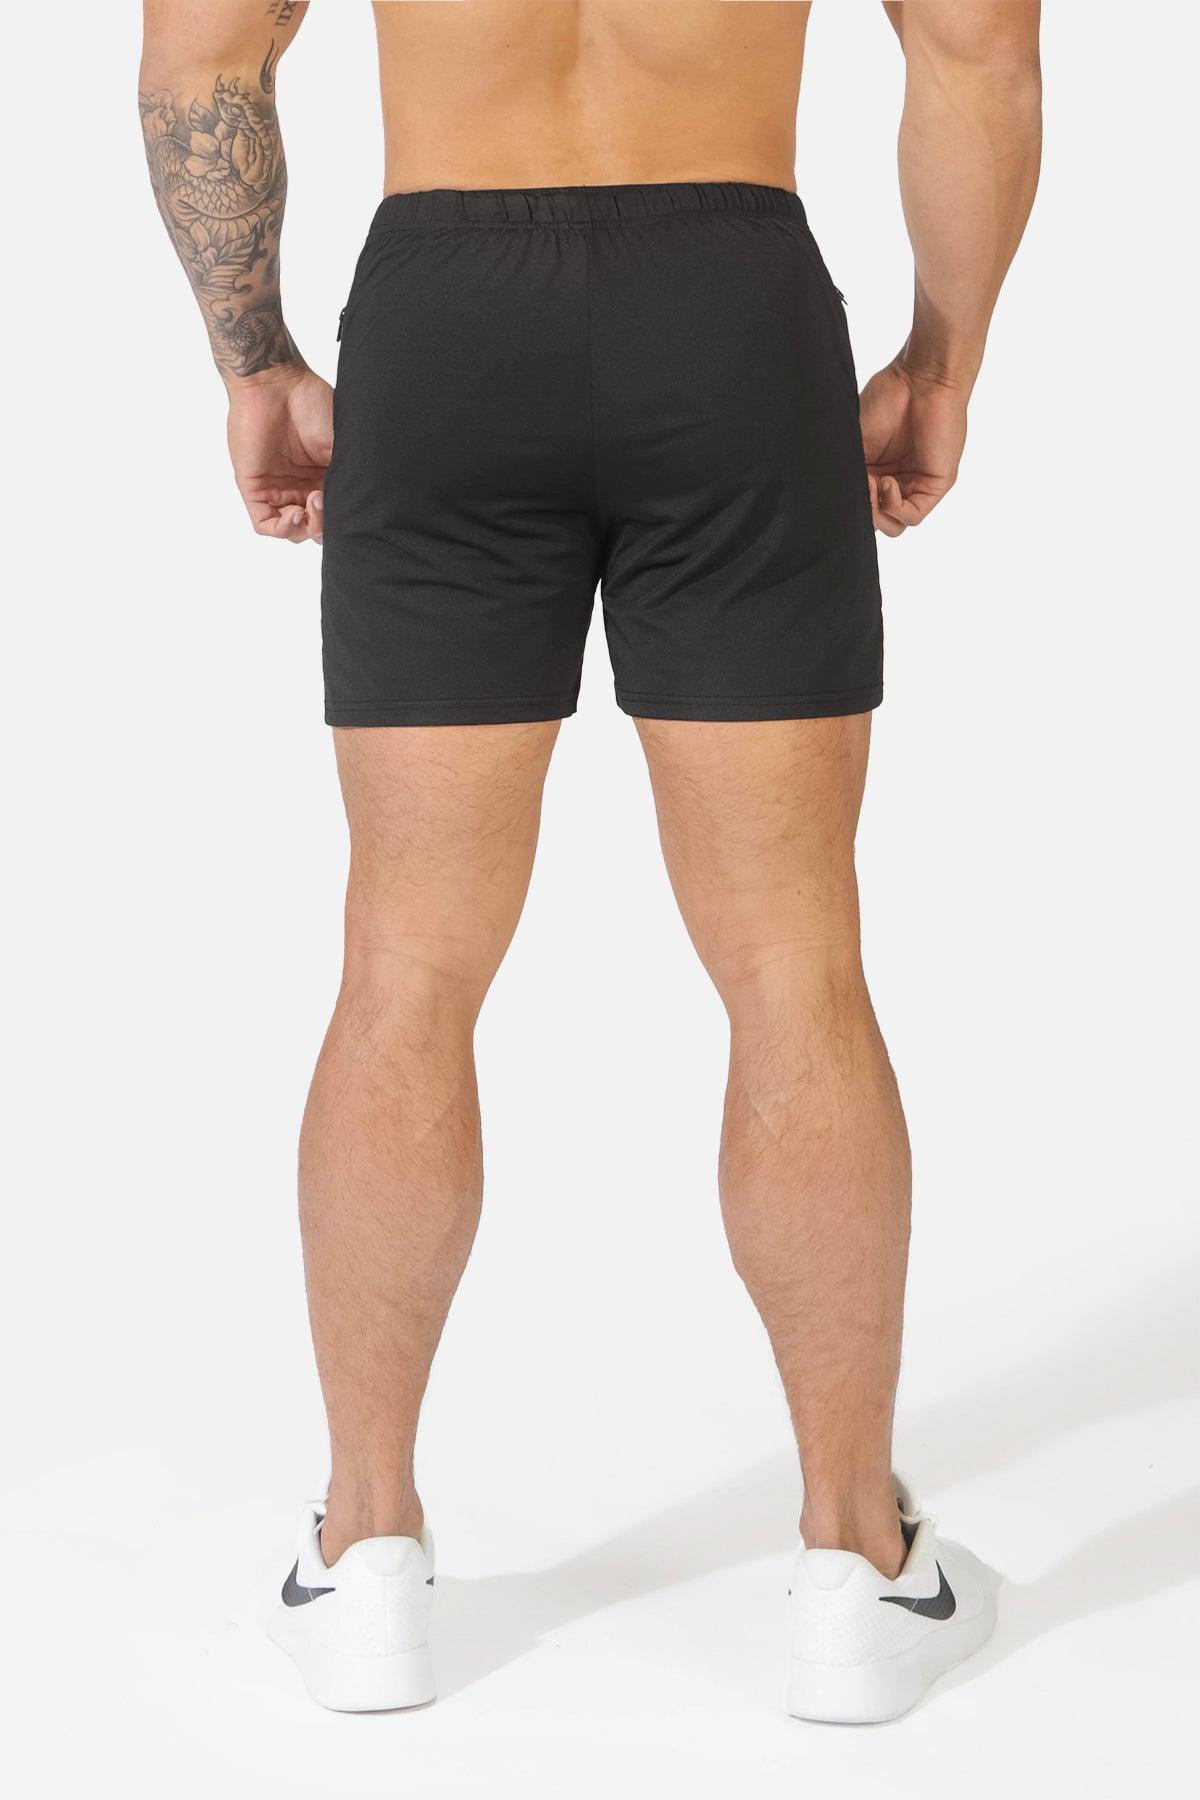 Agile Bodybuilding 4'' Shorts w Zipper Pockets - Black - Jed North